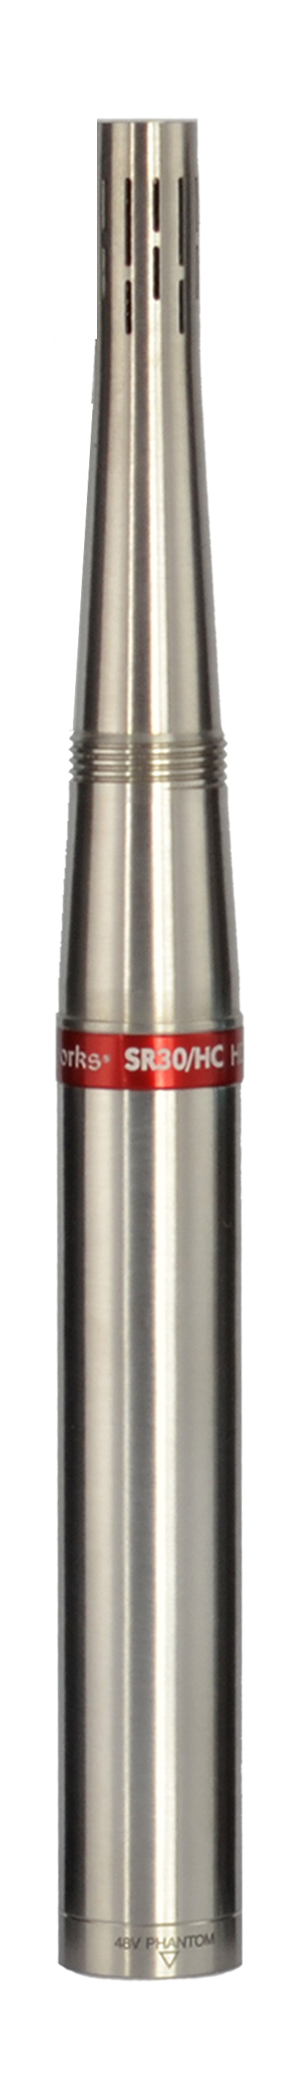 Earthworks SR30mp SR Series 30kHz Multi-Purpose Condenser Mic, Matched Pair (Cardioid)